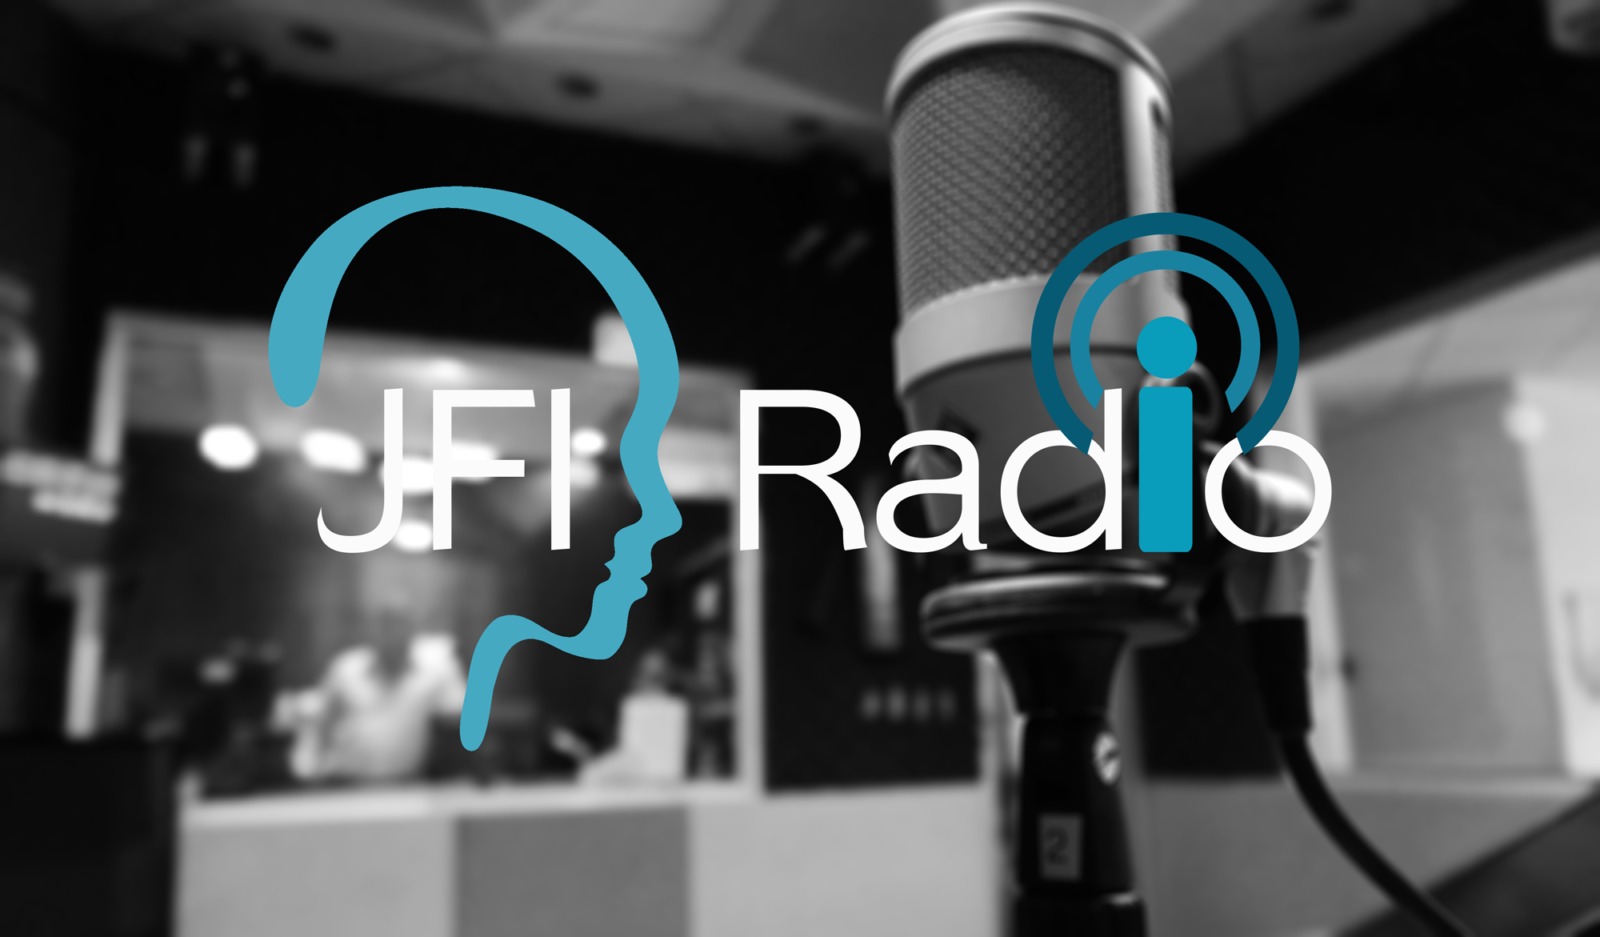 JFI Radio Cover image